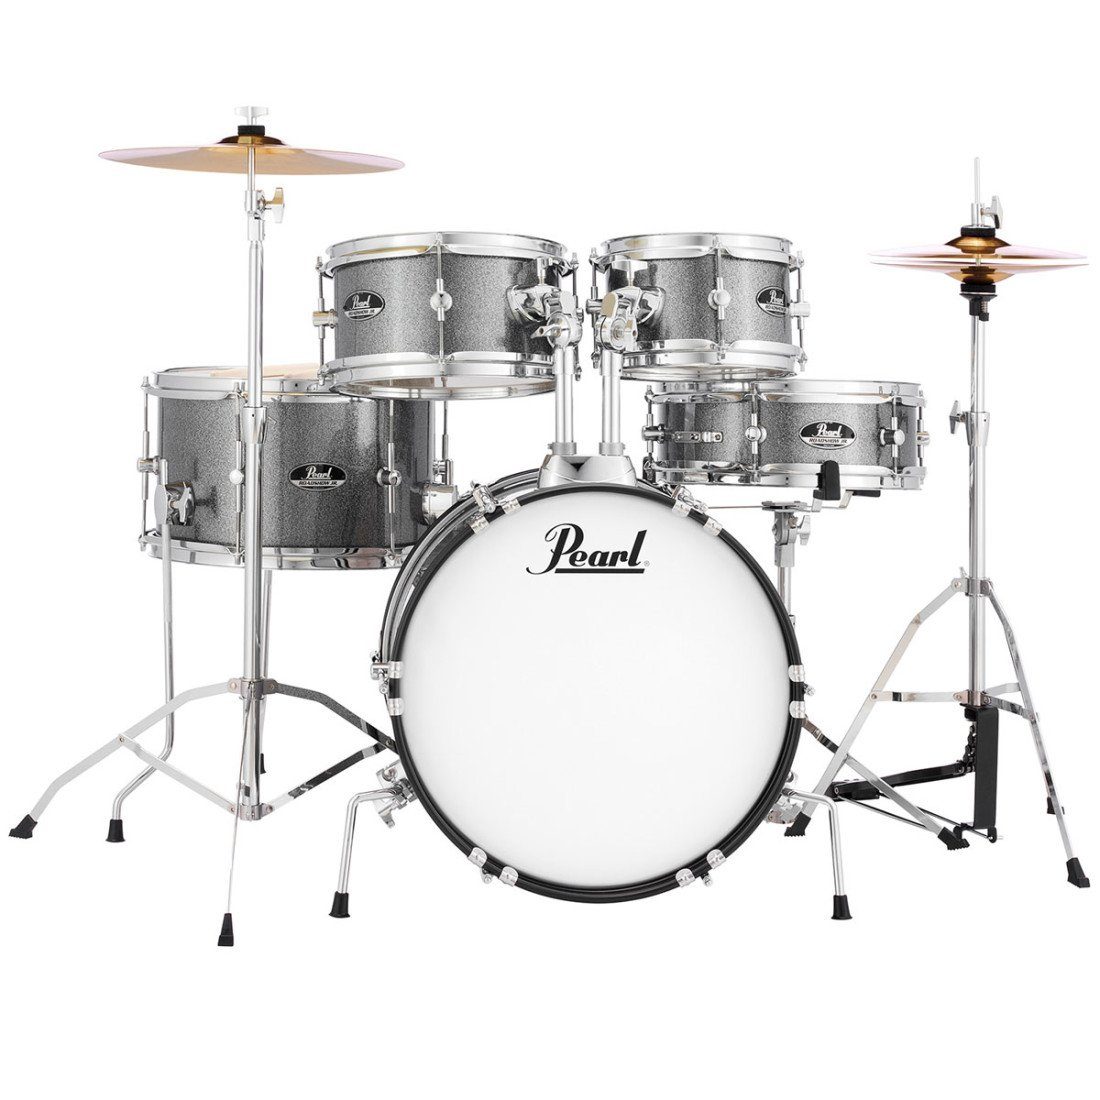 Pearl Drums Schlagzeug Roadshow RSJ465C-C708 Junior